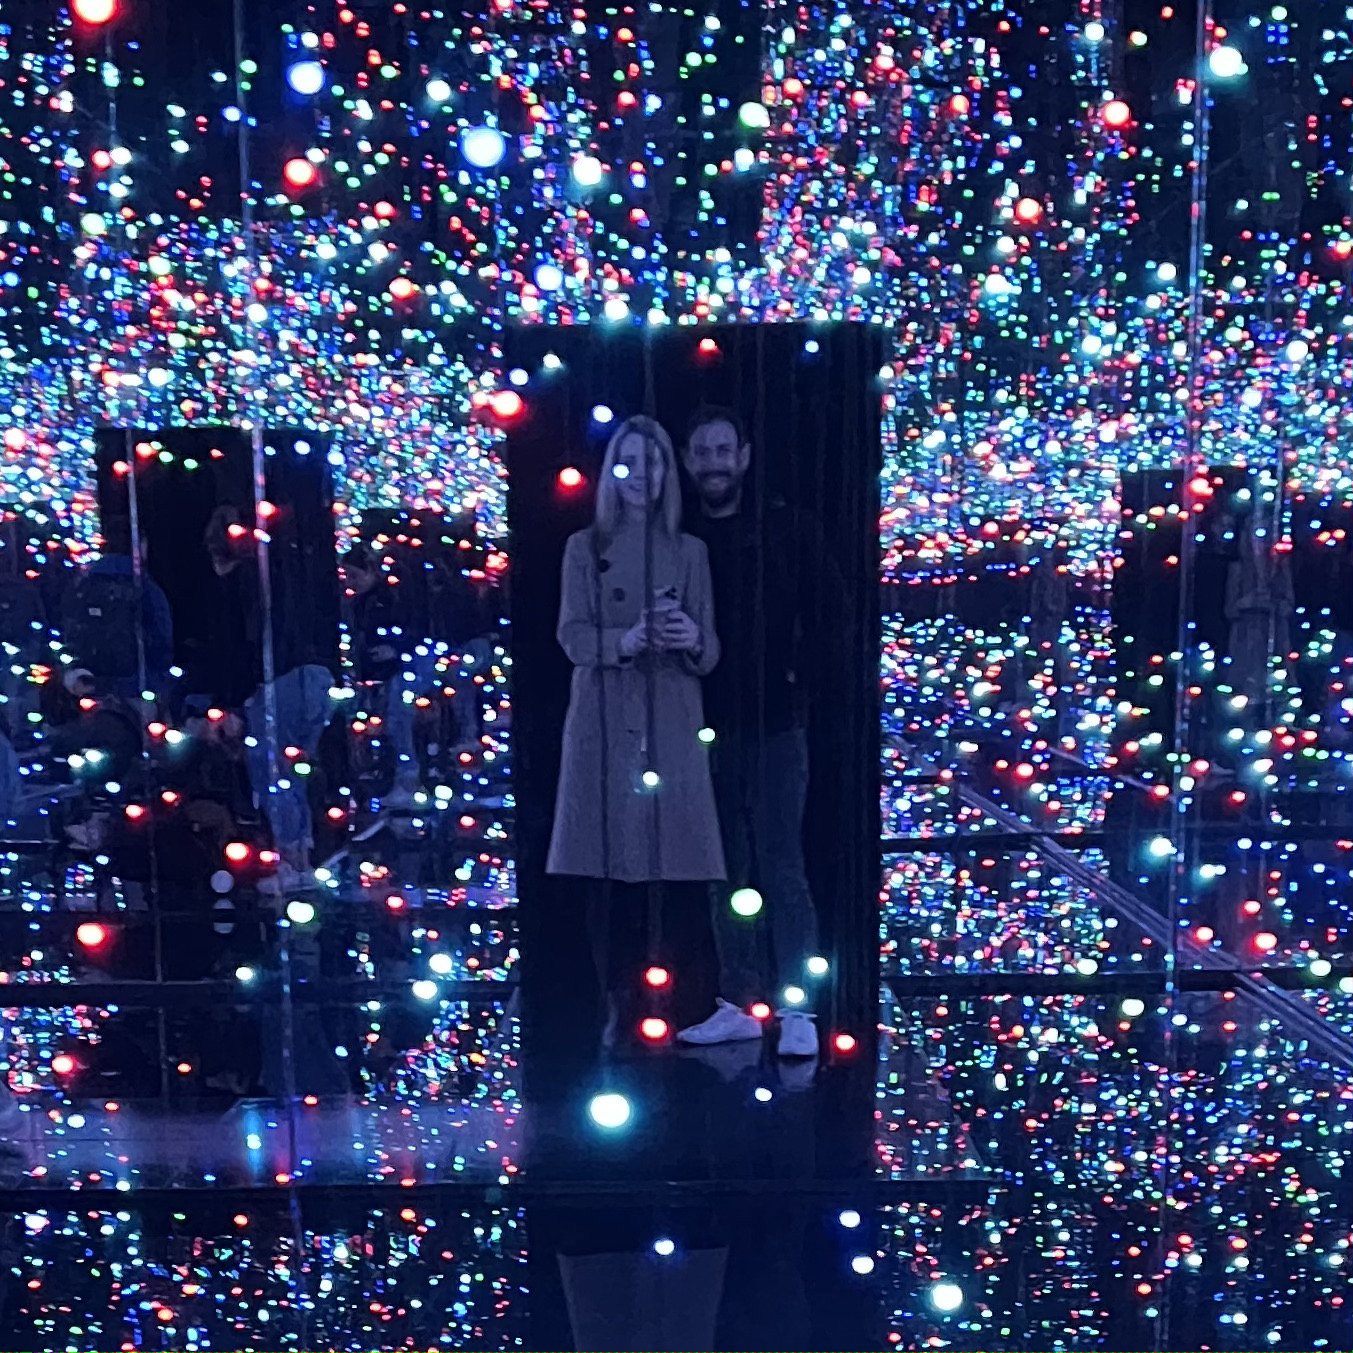 Yayoi Kusama - Infinity Mirror Rooms at The Tate Modern